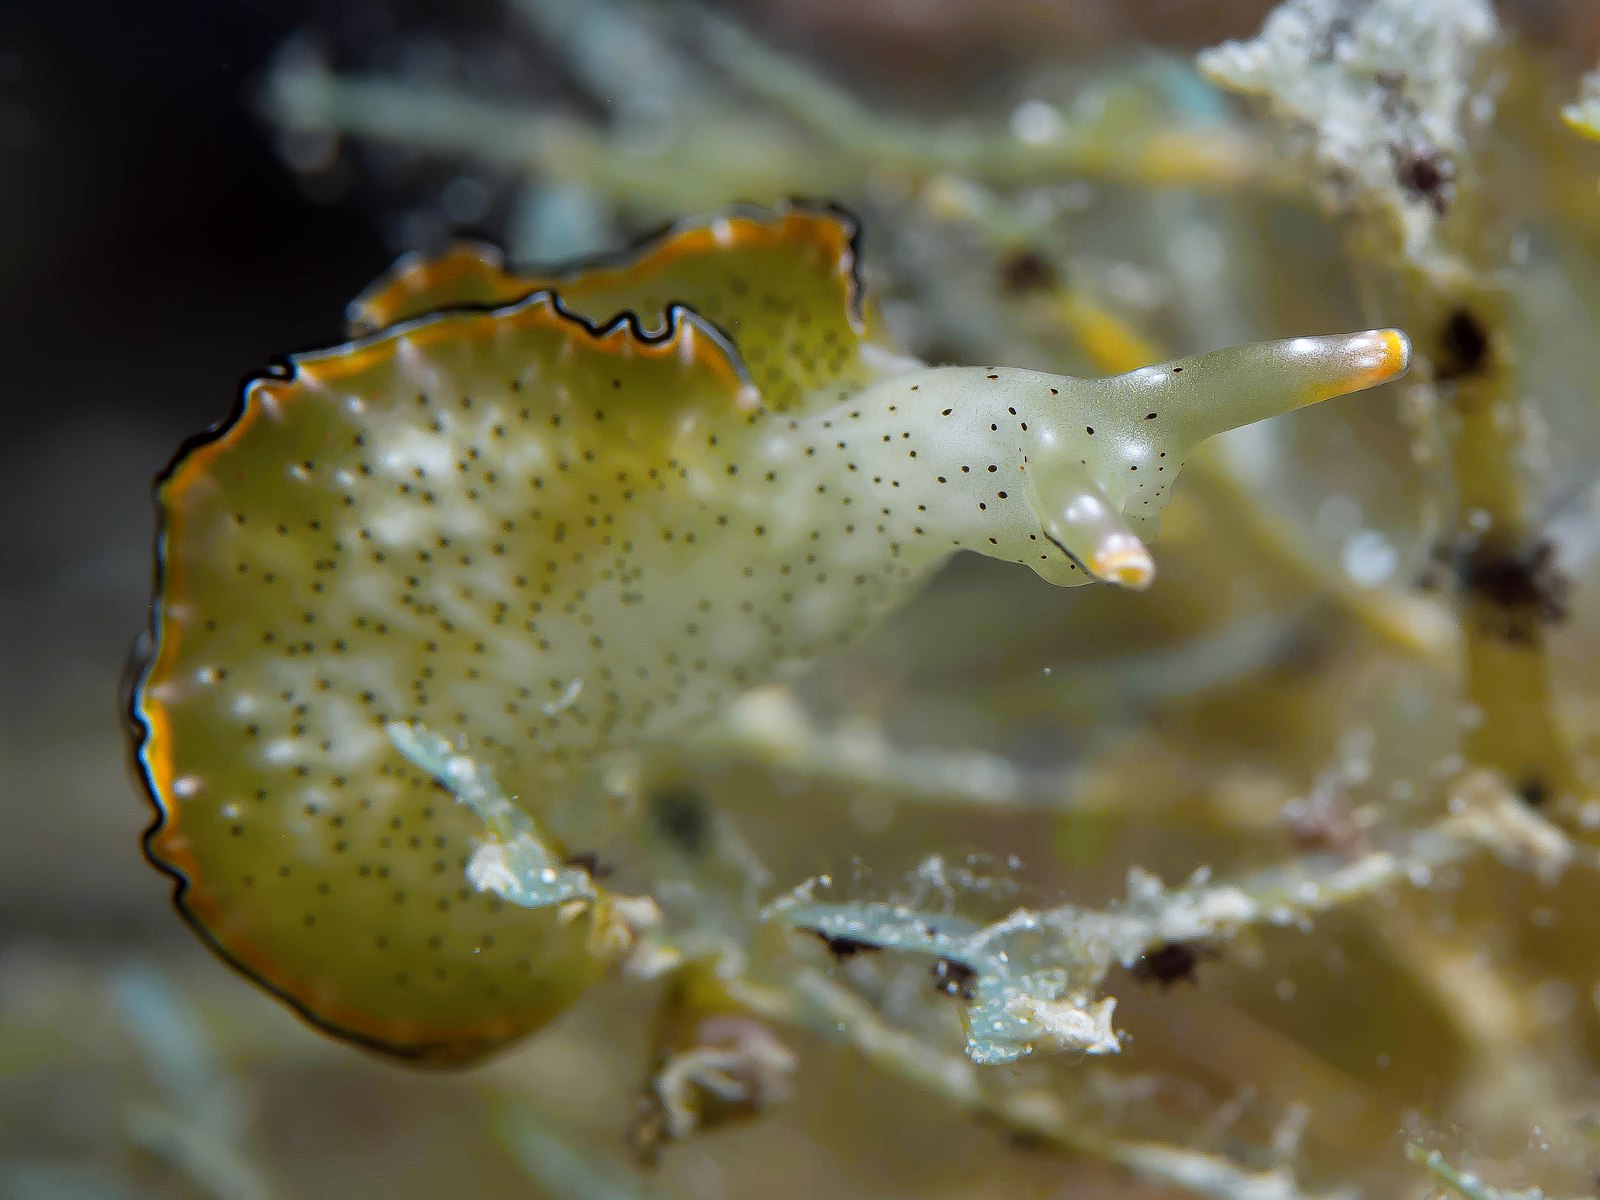 Sea Slugs are Decapitating Themselves